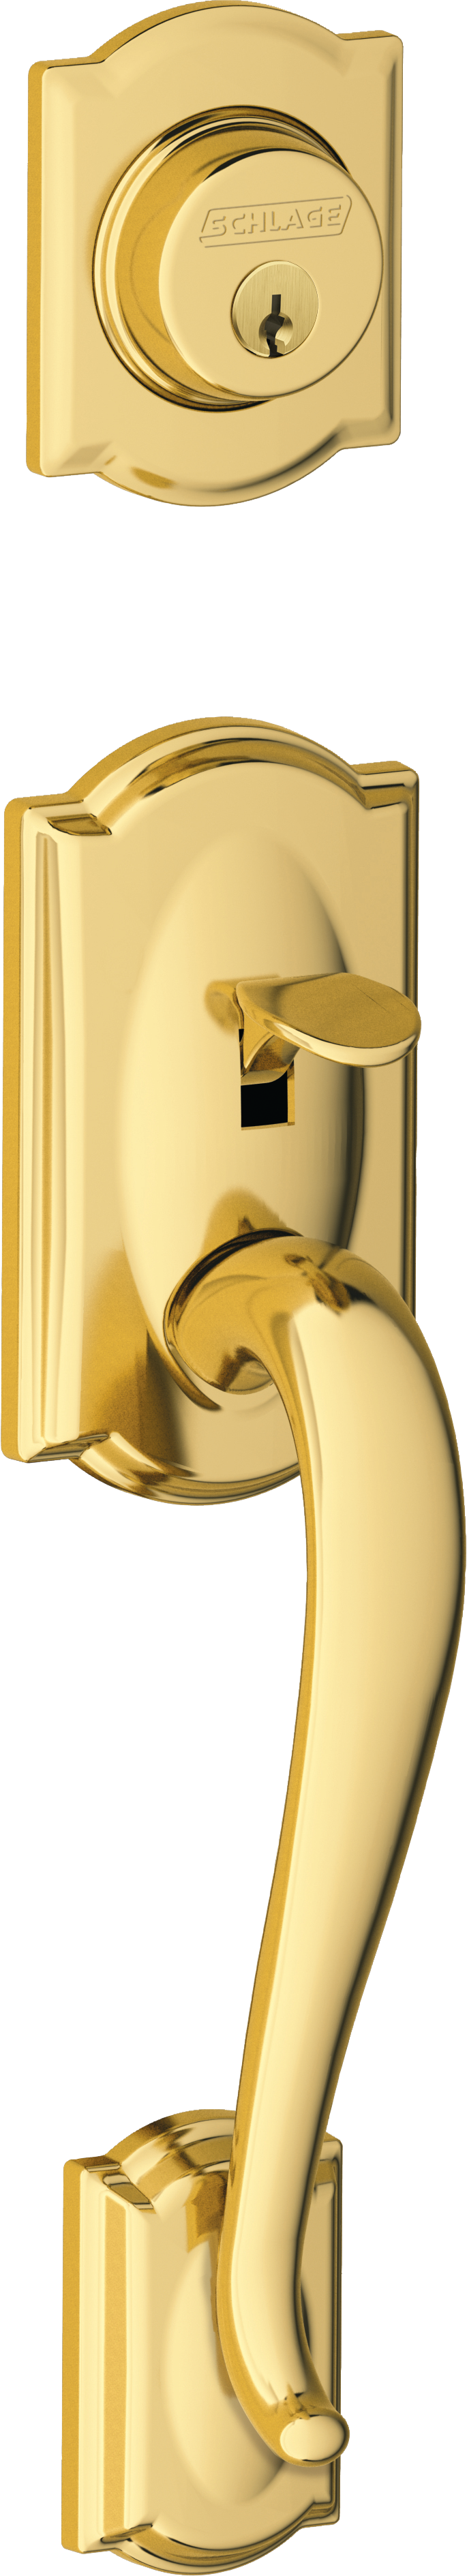 bright brass handle